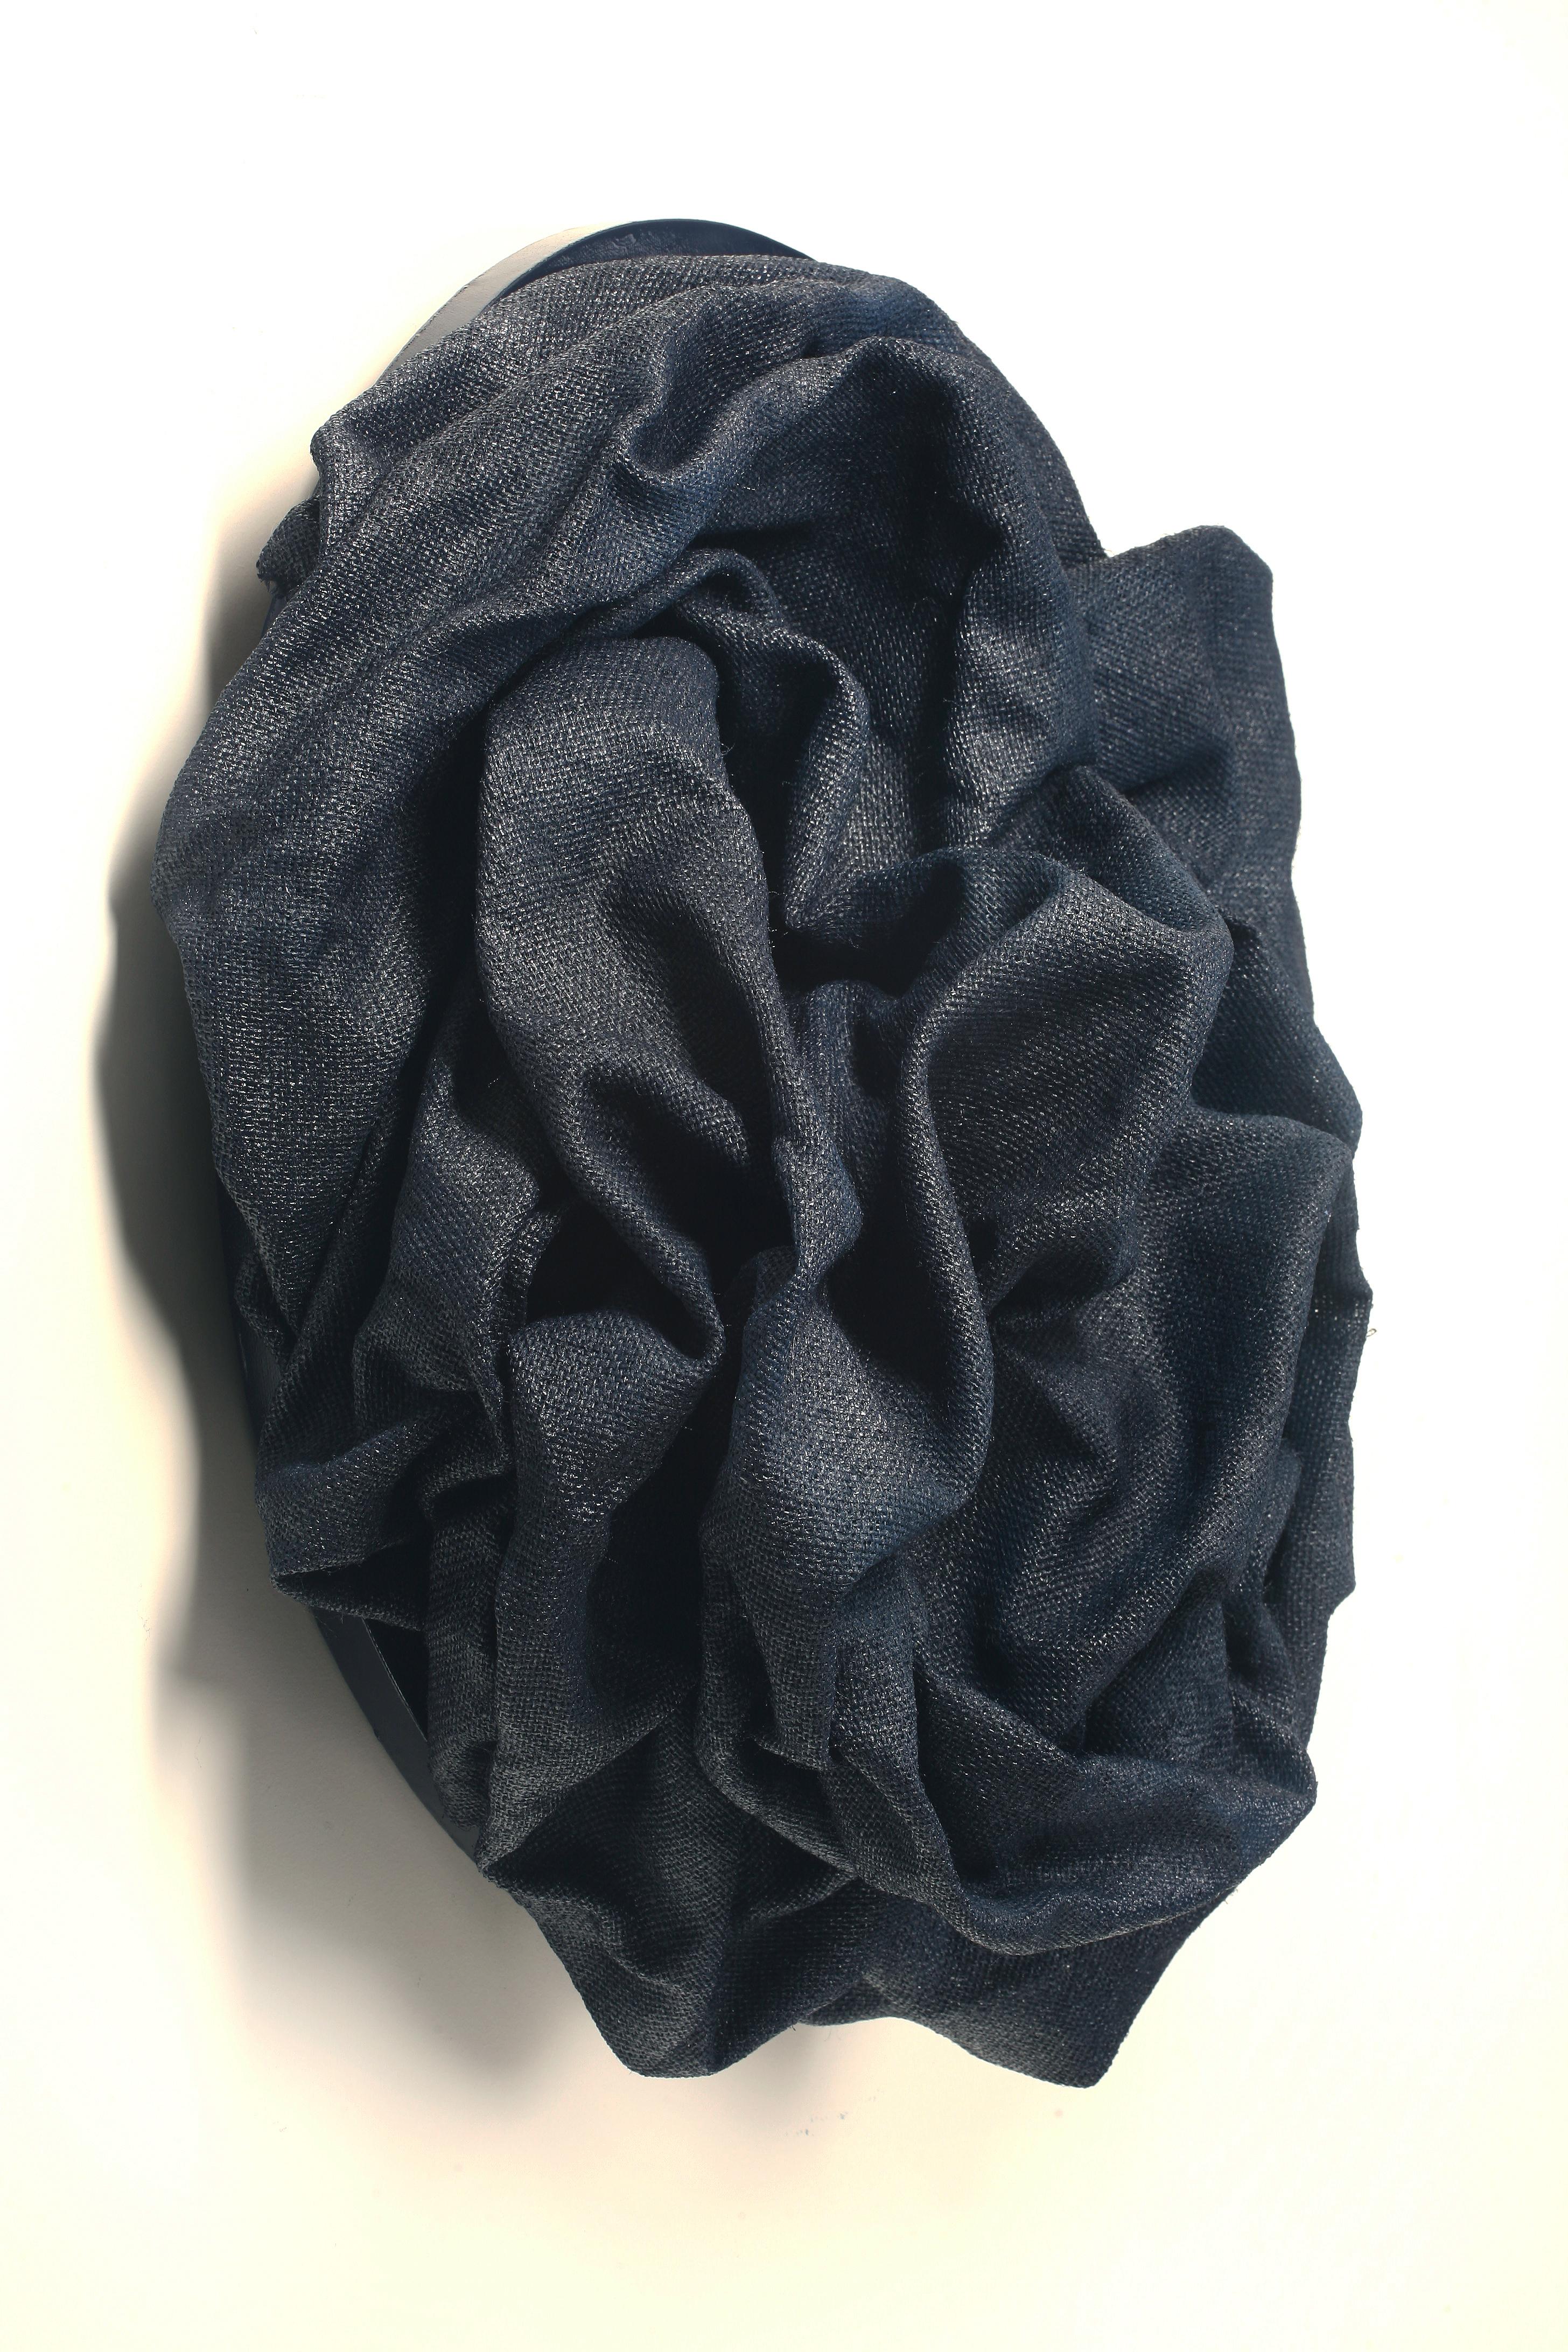 Indigo Folds I (fabric, wall sculpture, dark, contemporary design, textile arts - Black Abstract Sculpture by Chloe Hedden